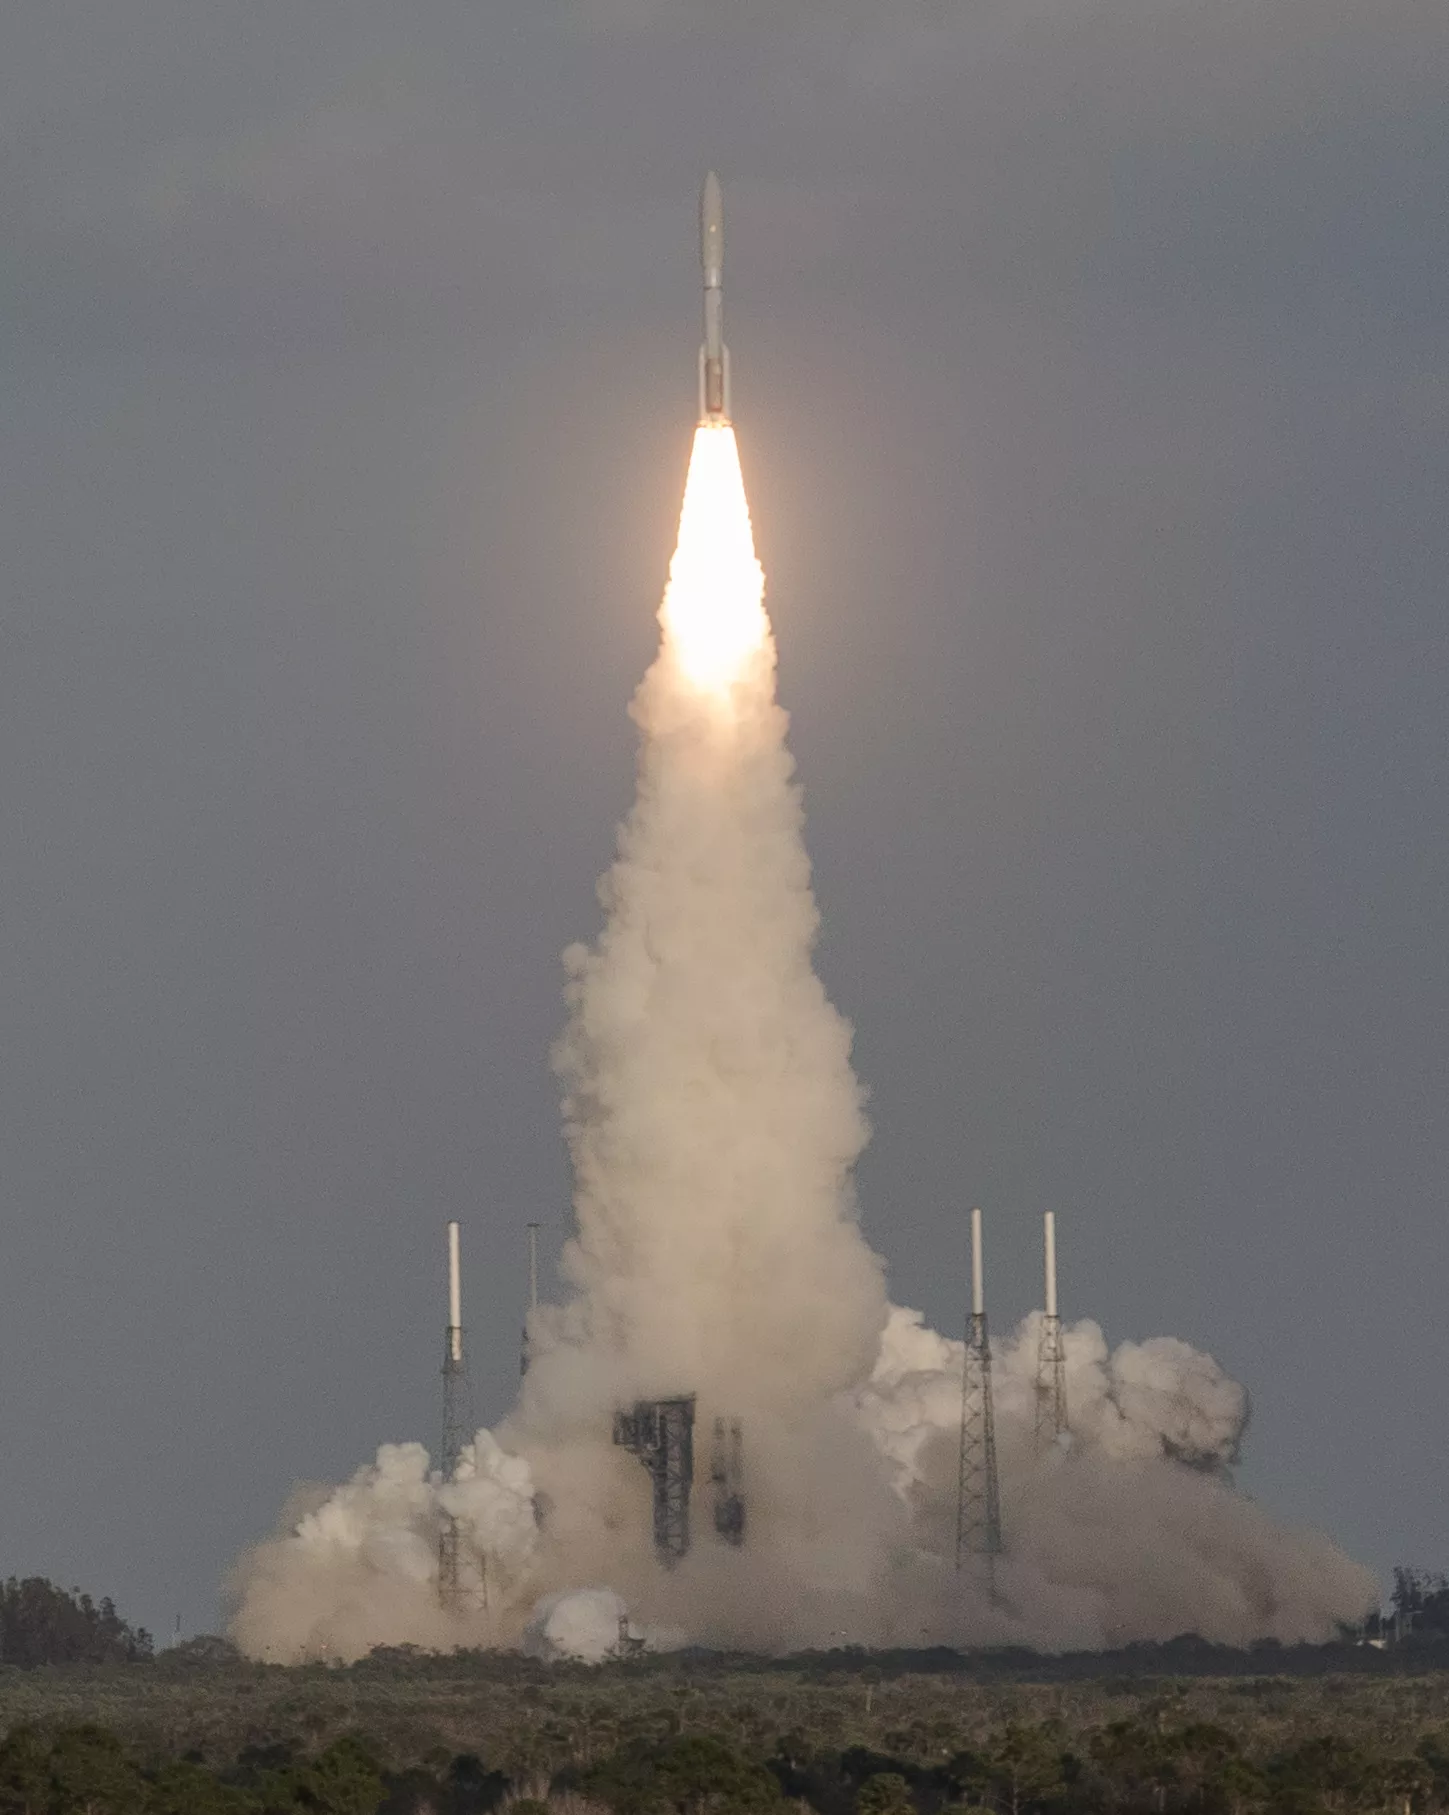 Image of a rocket